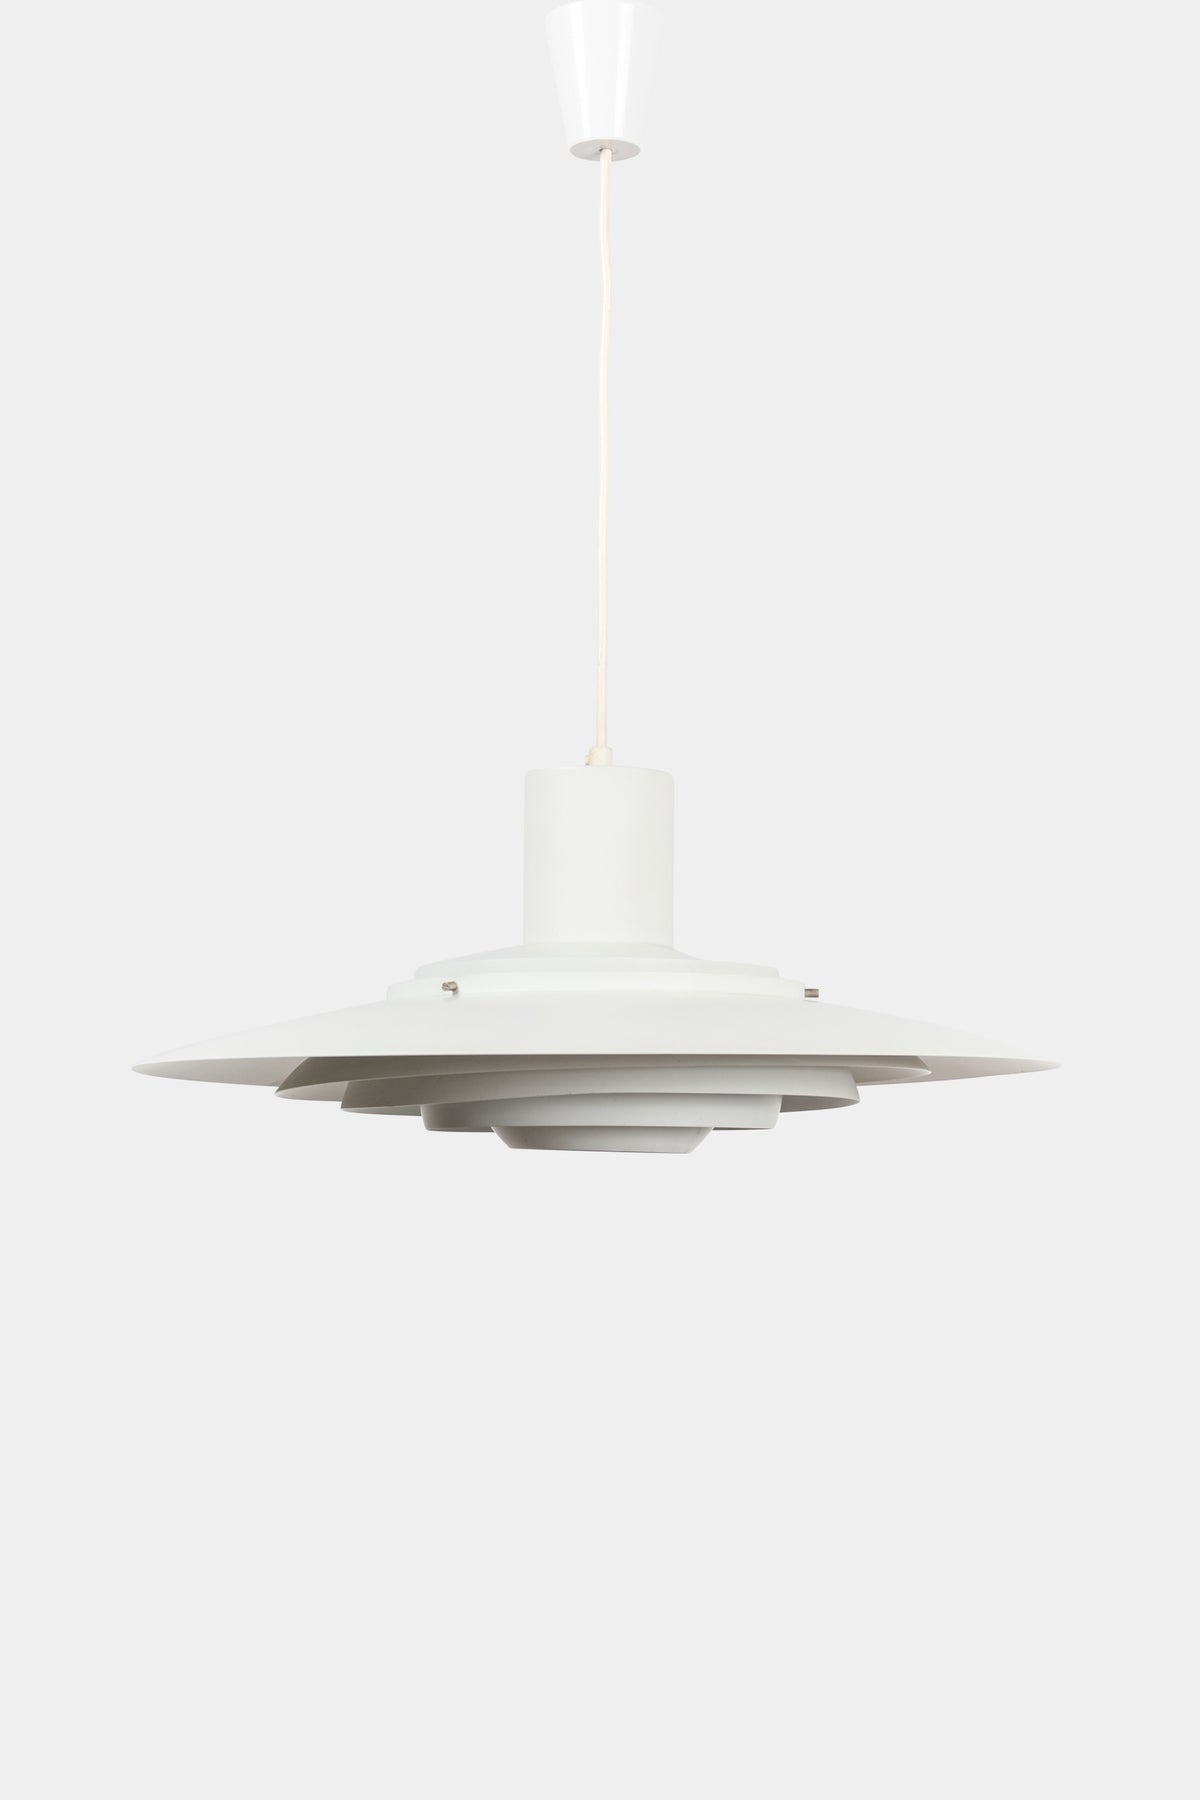 Fabricius & Kastholm, ceiling lamp, Denmark, 60s